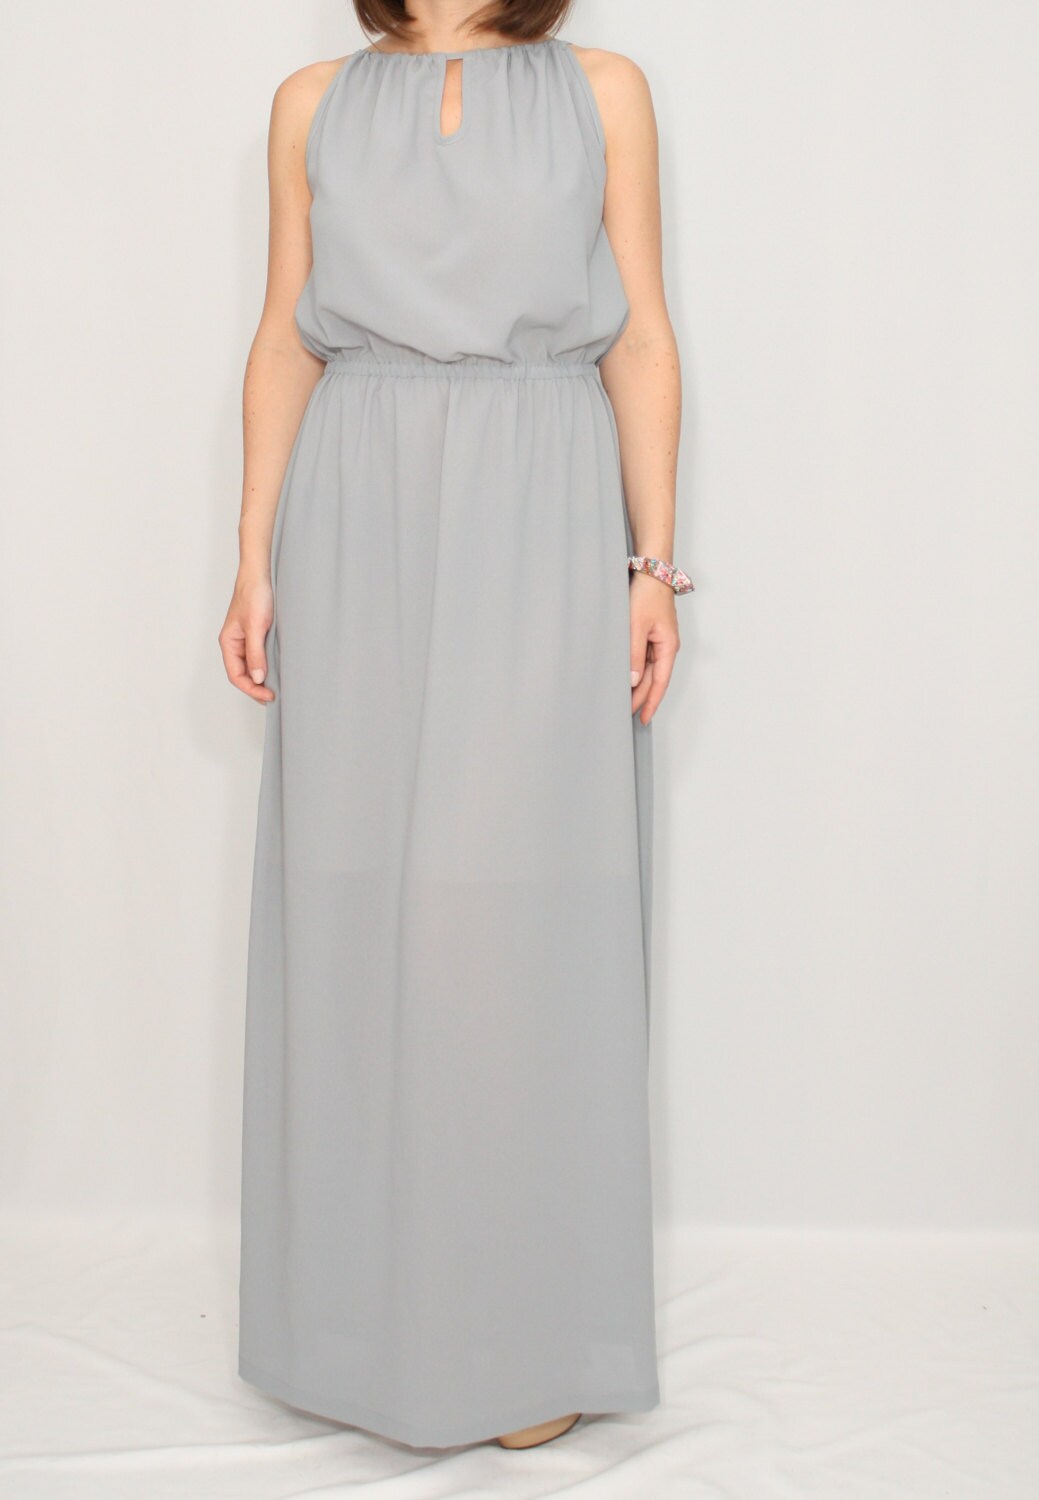 Grey maxi dress long dress bridesmaid dress sundress | Etsy